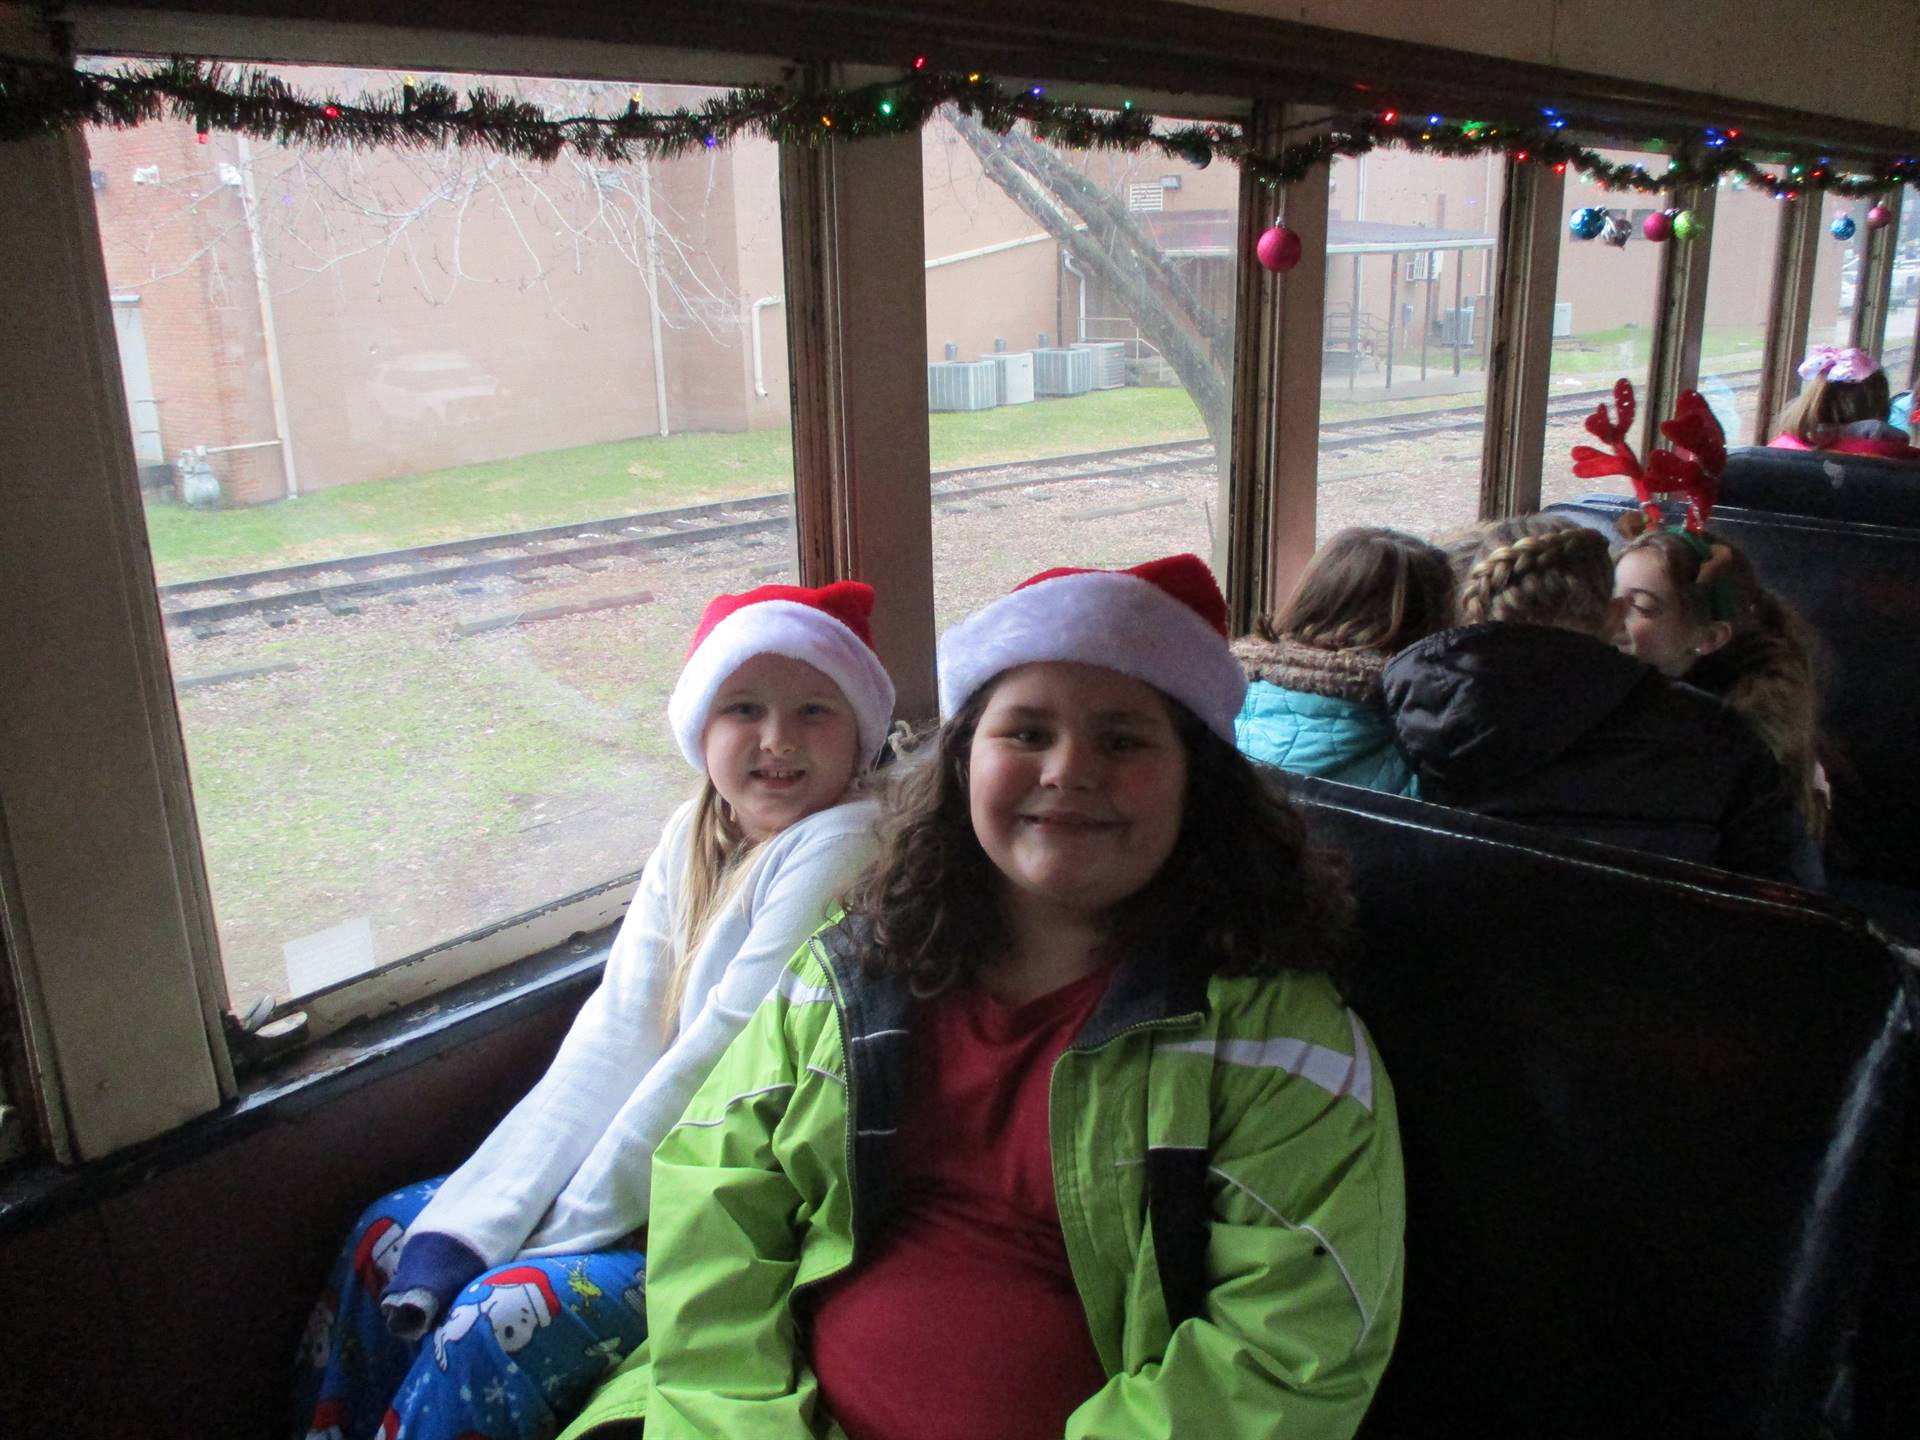 train ride with Santa